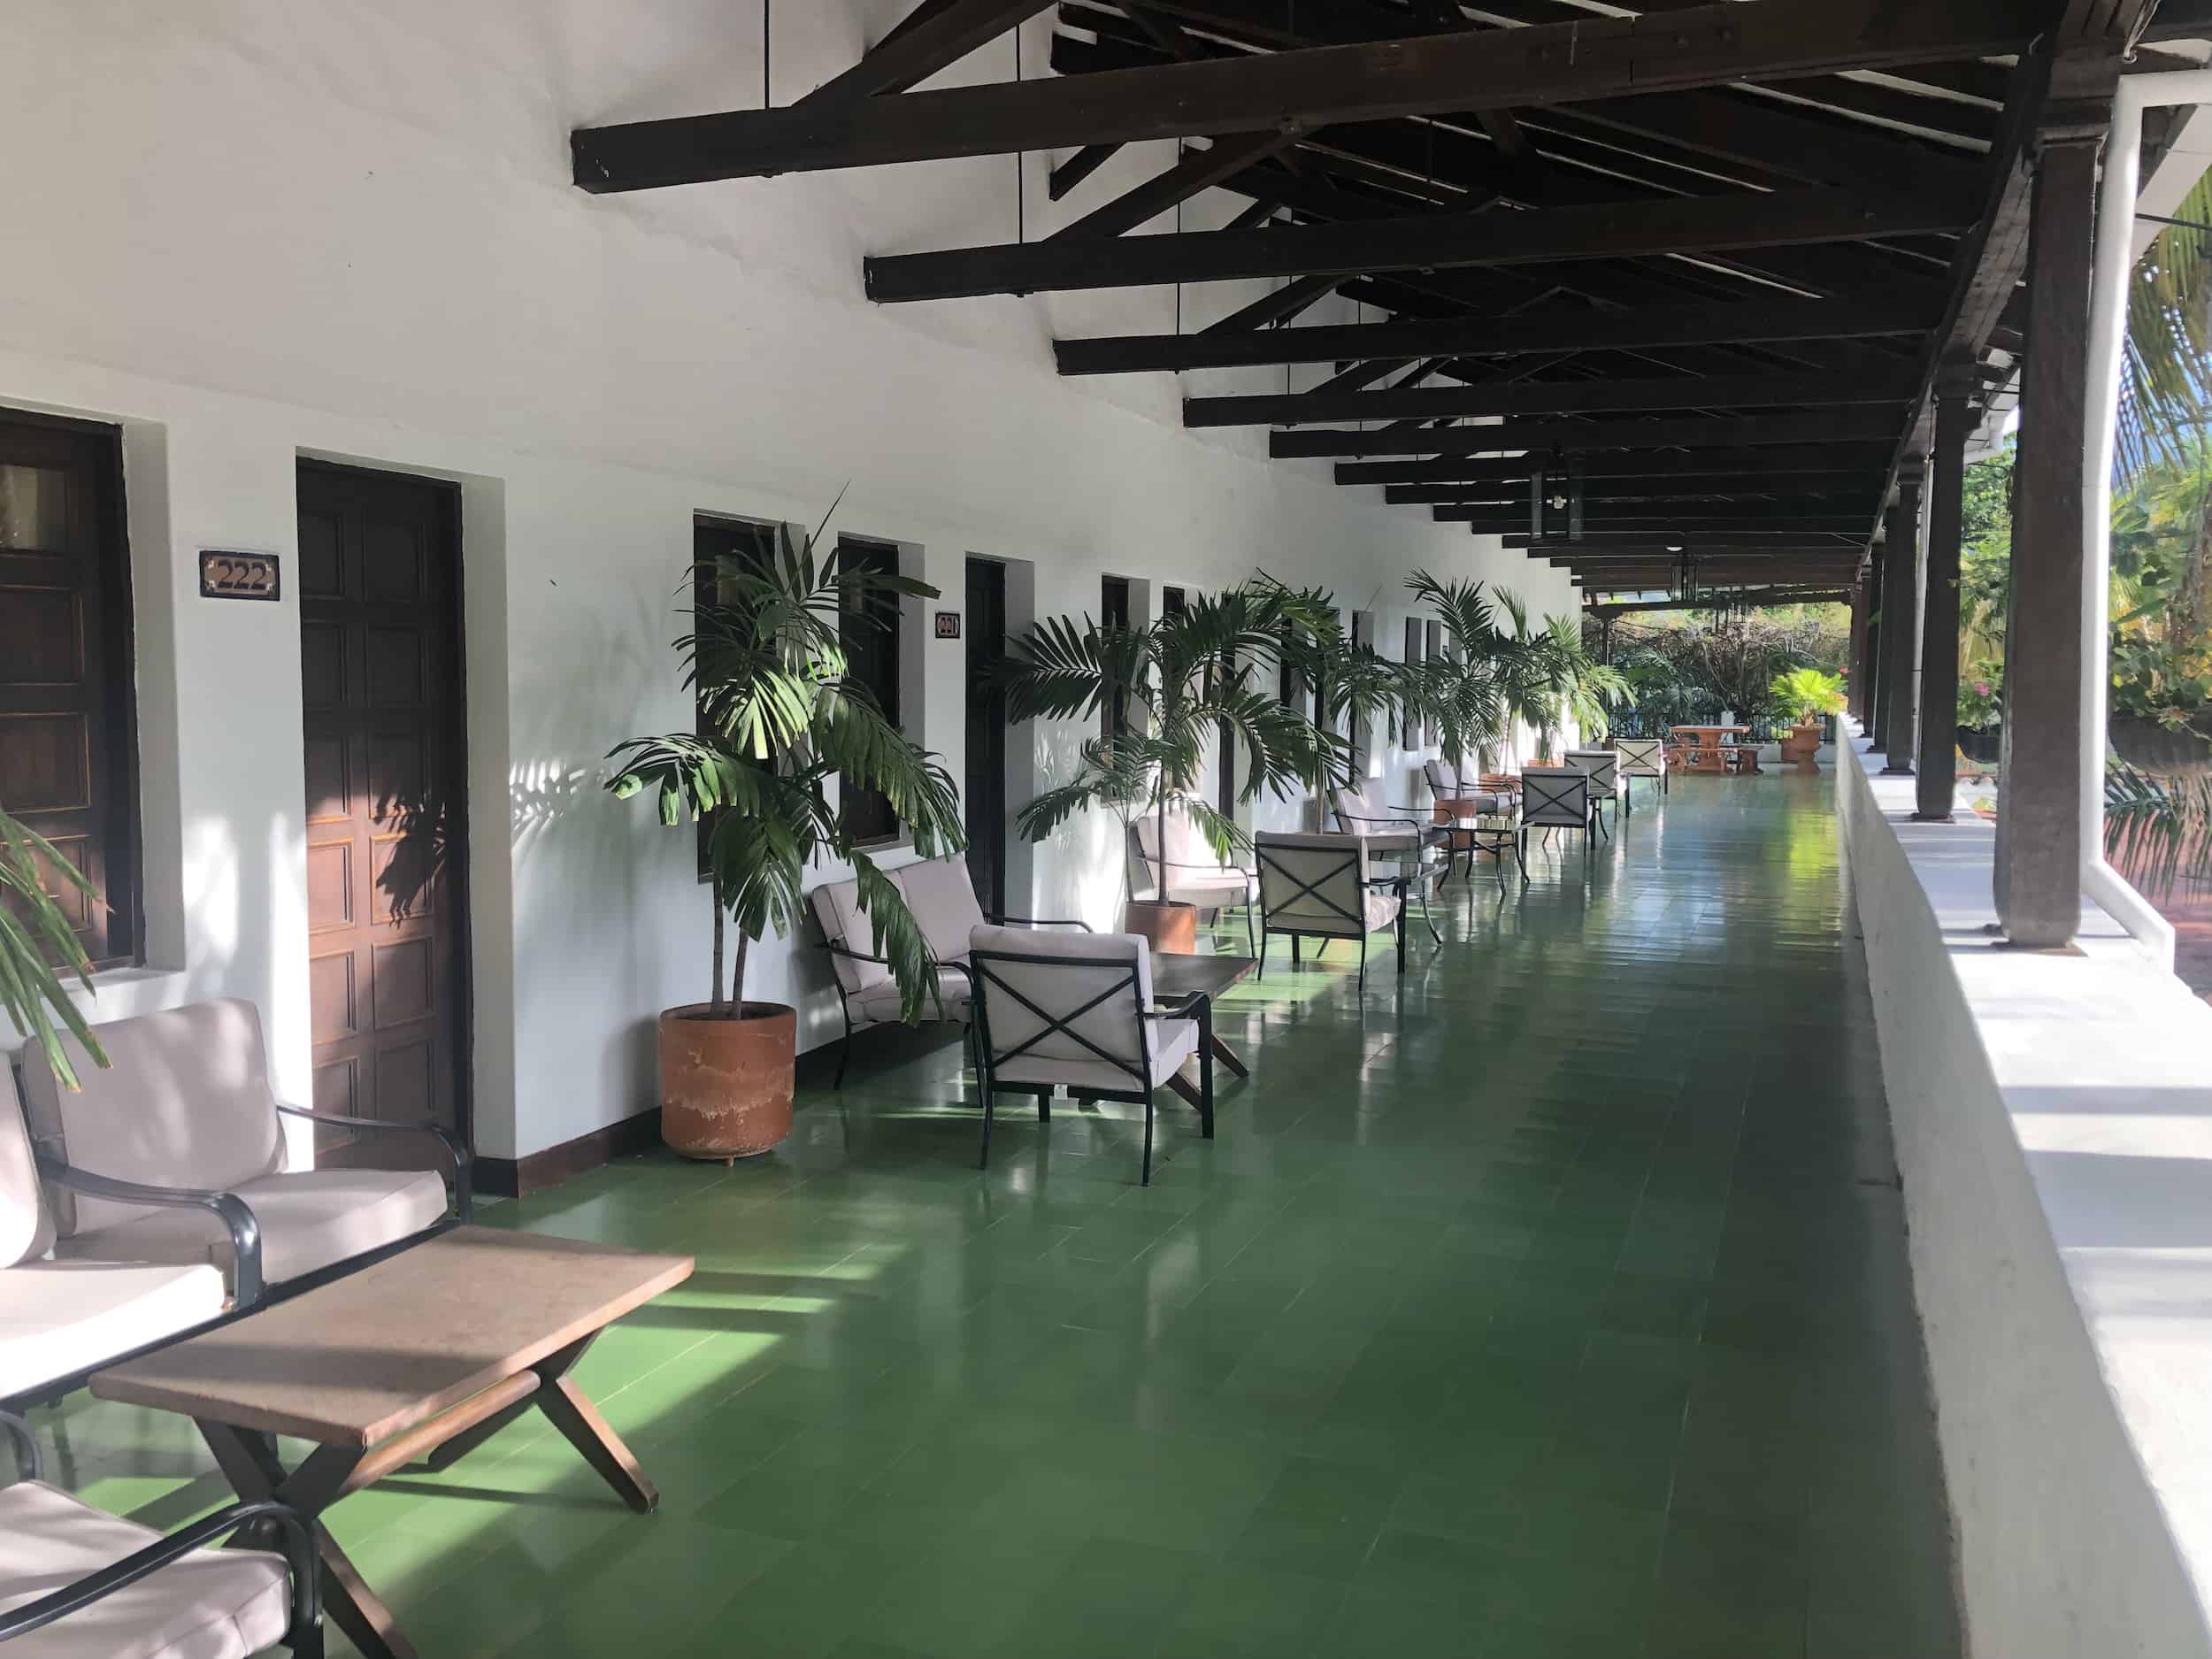 Corridor at Hotel Mariscal Robledo in Santa Fe de Antioquia, Colombia